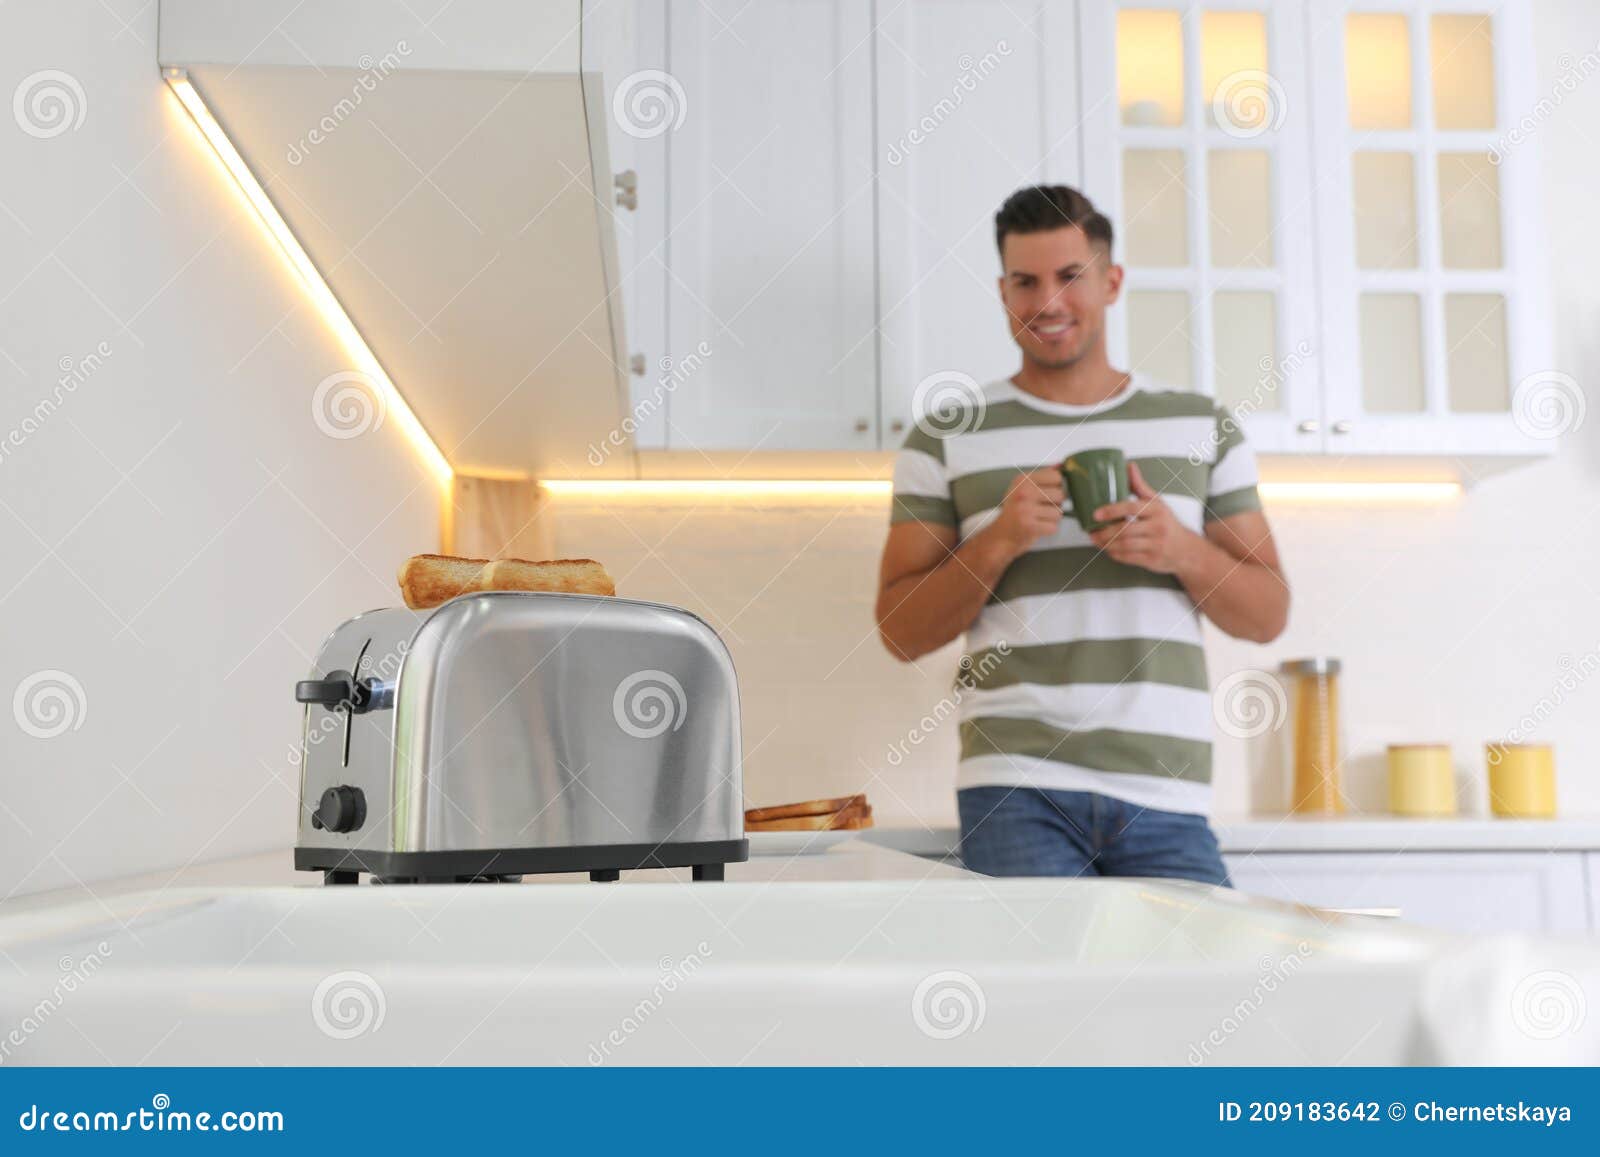 https://thumbs.dreamstime.com/z/man-preparing-breakfast-kitchen-focus-toaster-man-preparing-breakfast-kitchen-focus-toaster-slices-bread-209183642.jpg